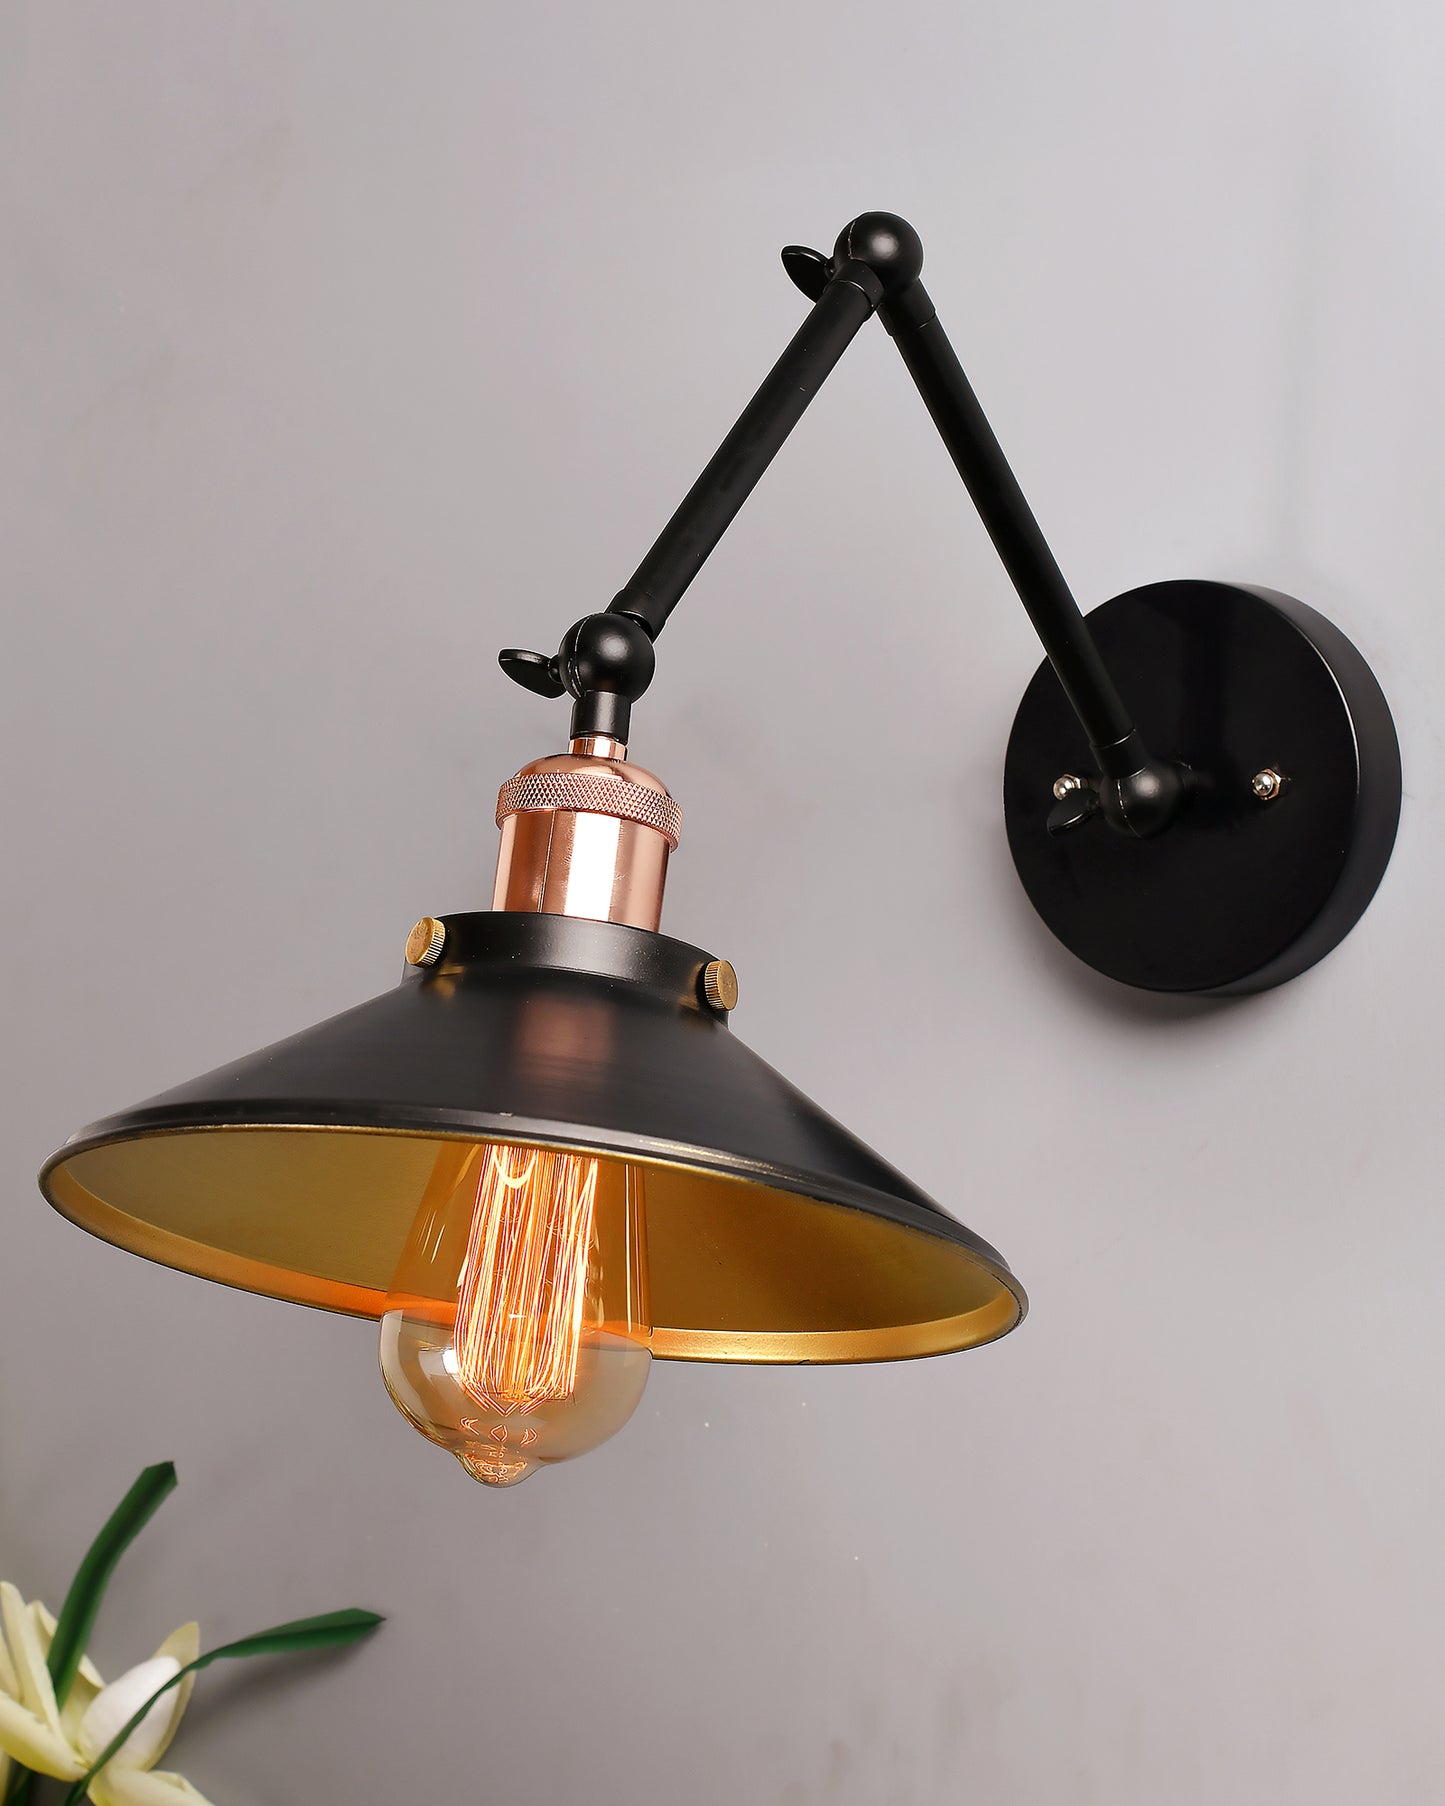 Edison Black 360 Cone Shade Wall Lamp, Vintage Industrial Loft, E27 Holder, Decorative, Swing Wall Light, Triple movement